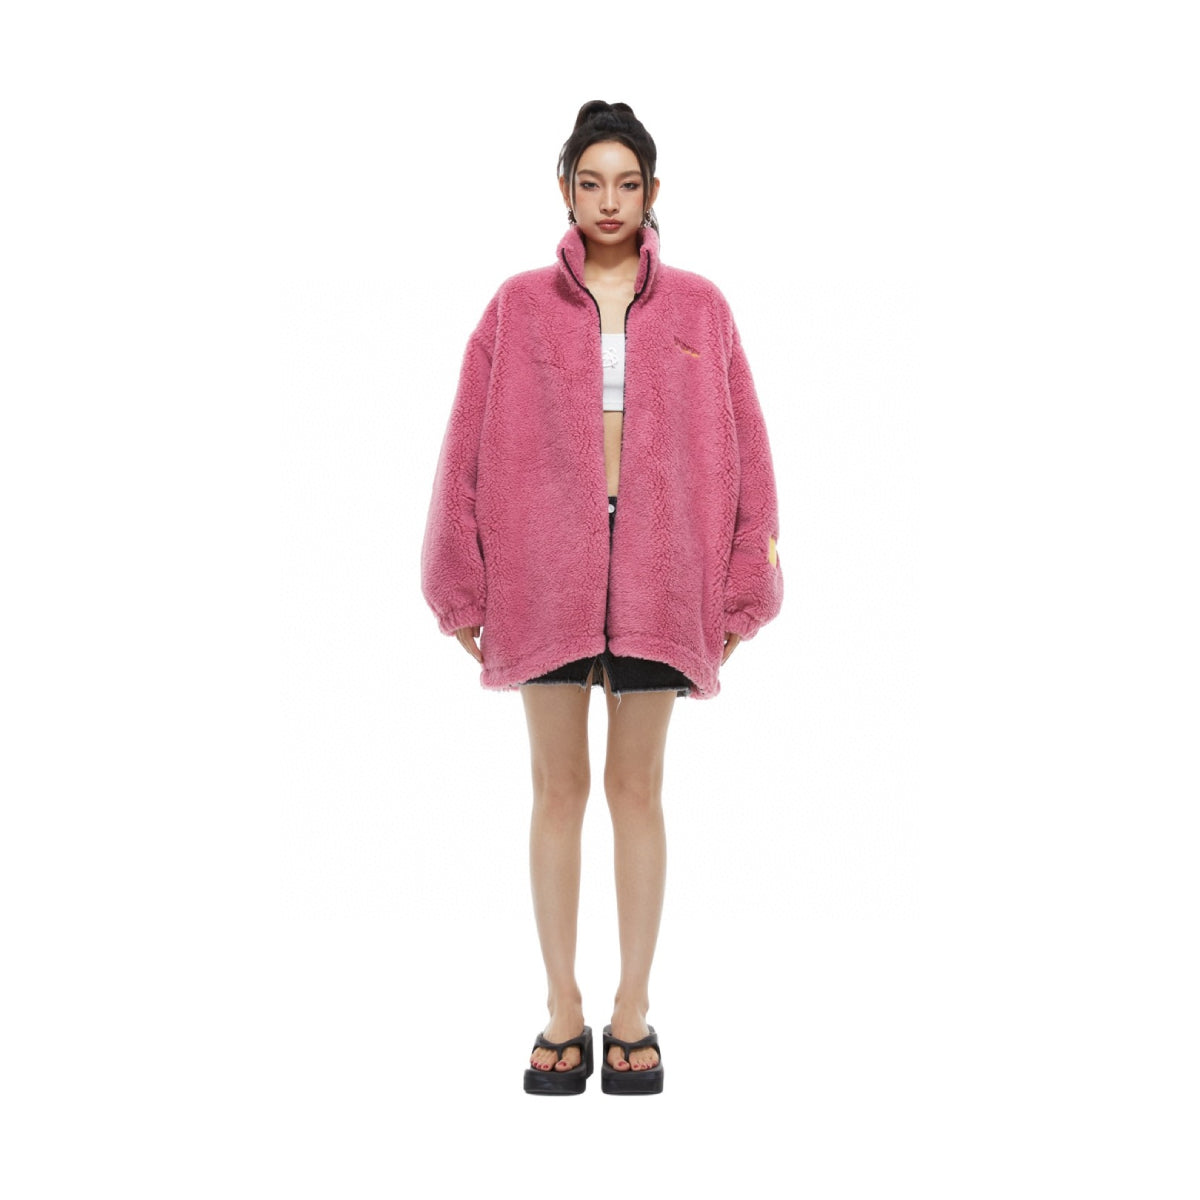 Ann Andelman Oversize Teddy Fur Jacket Pink